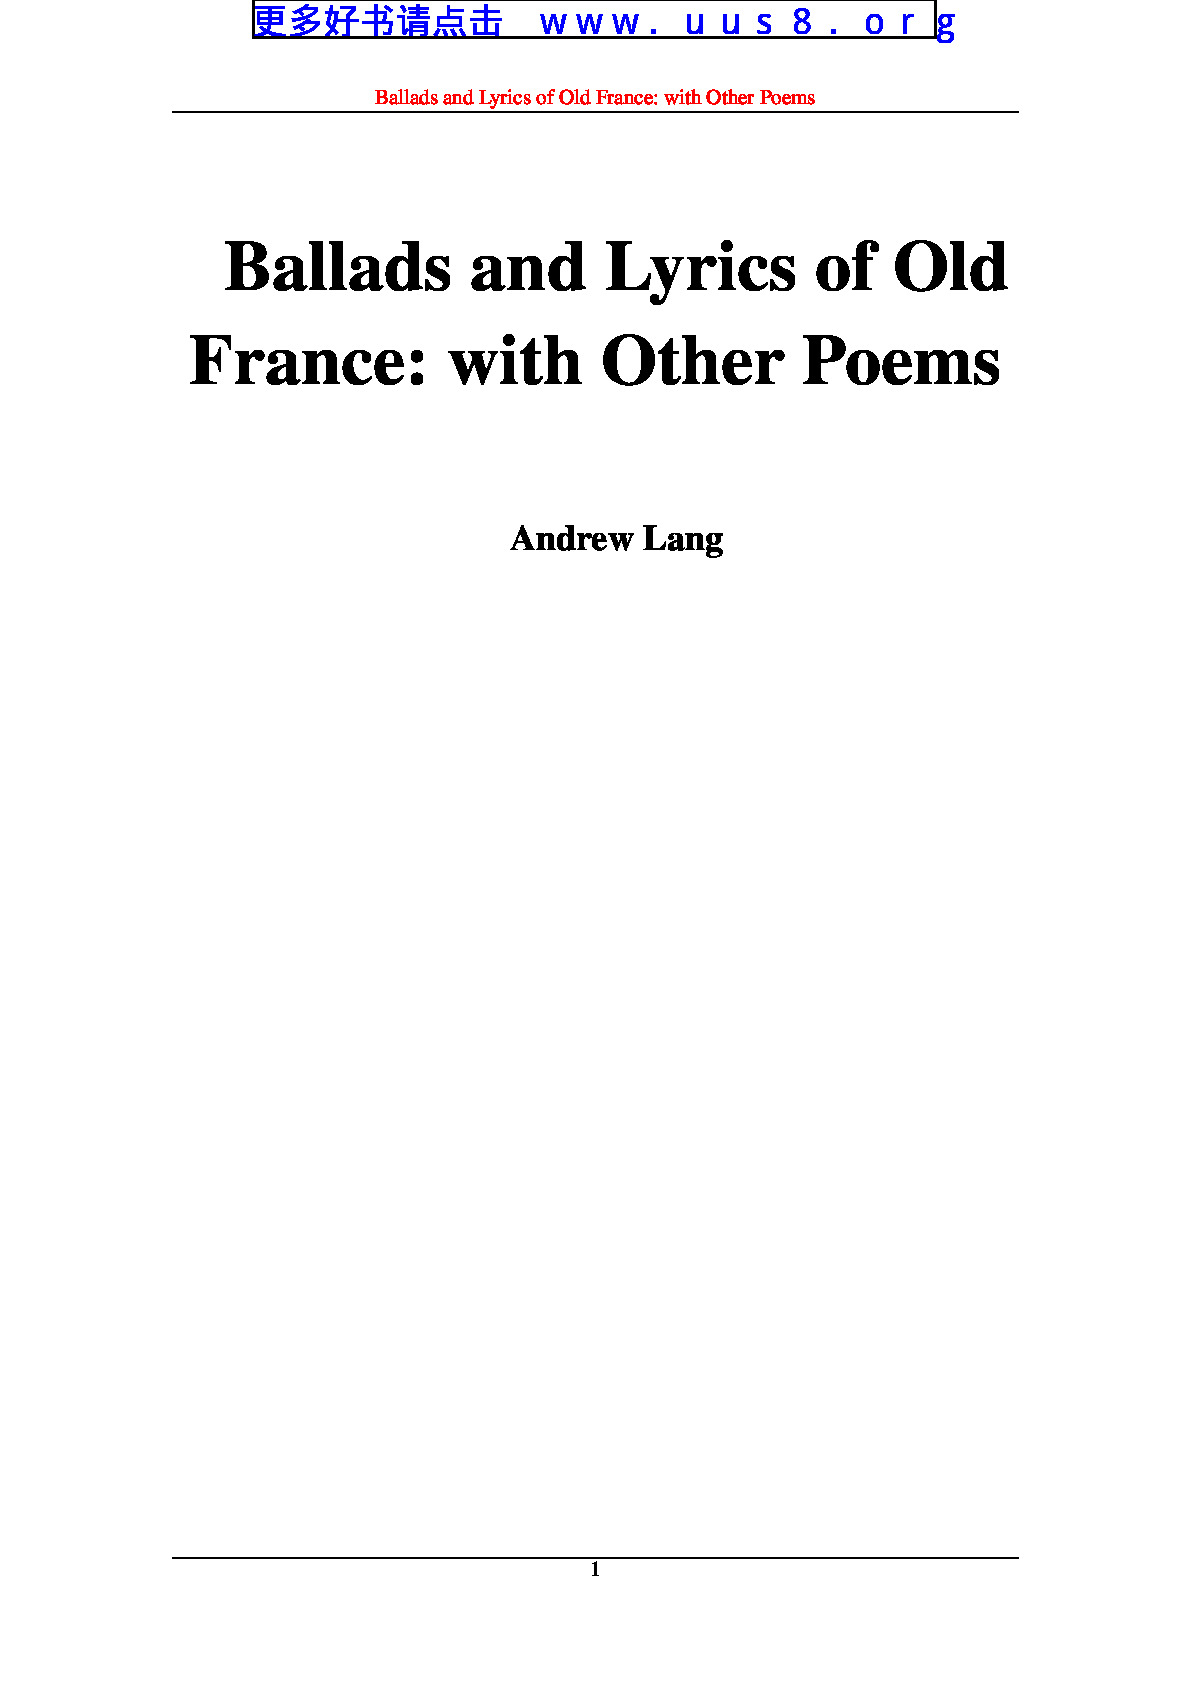 ballads_lyrics_and_poems_of_old_france(古法兰西民抒情歌与诗集)